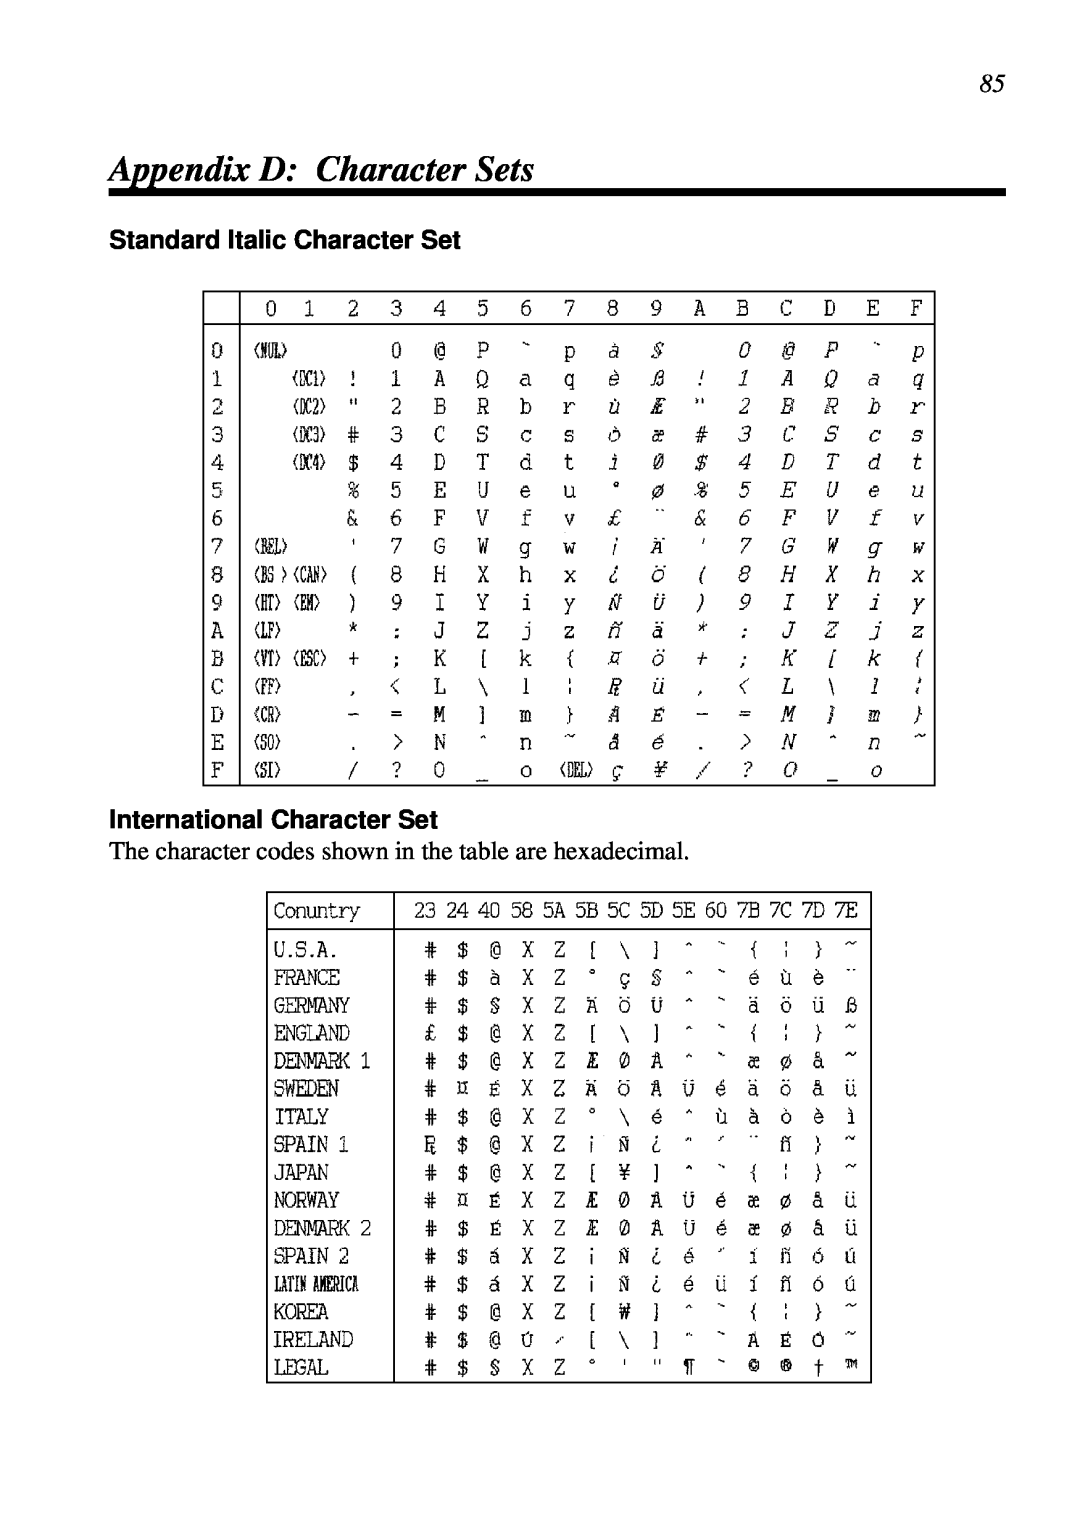 Star Micronics LC-1511, LC-1521 Appendix D Character Sets, Standard Italic Character Set International Character Set 